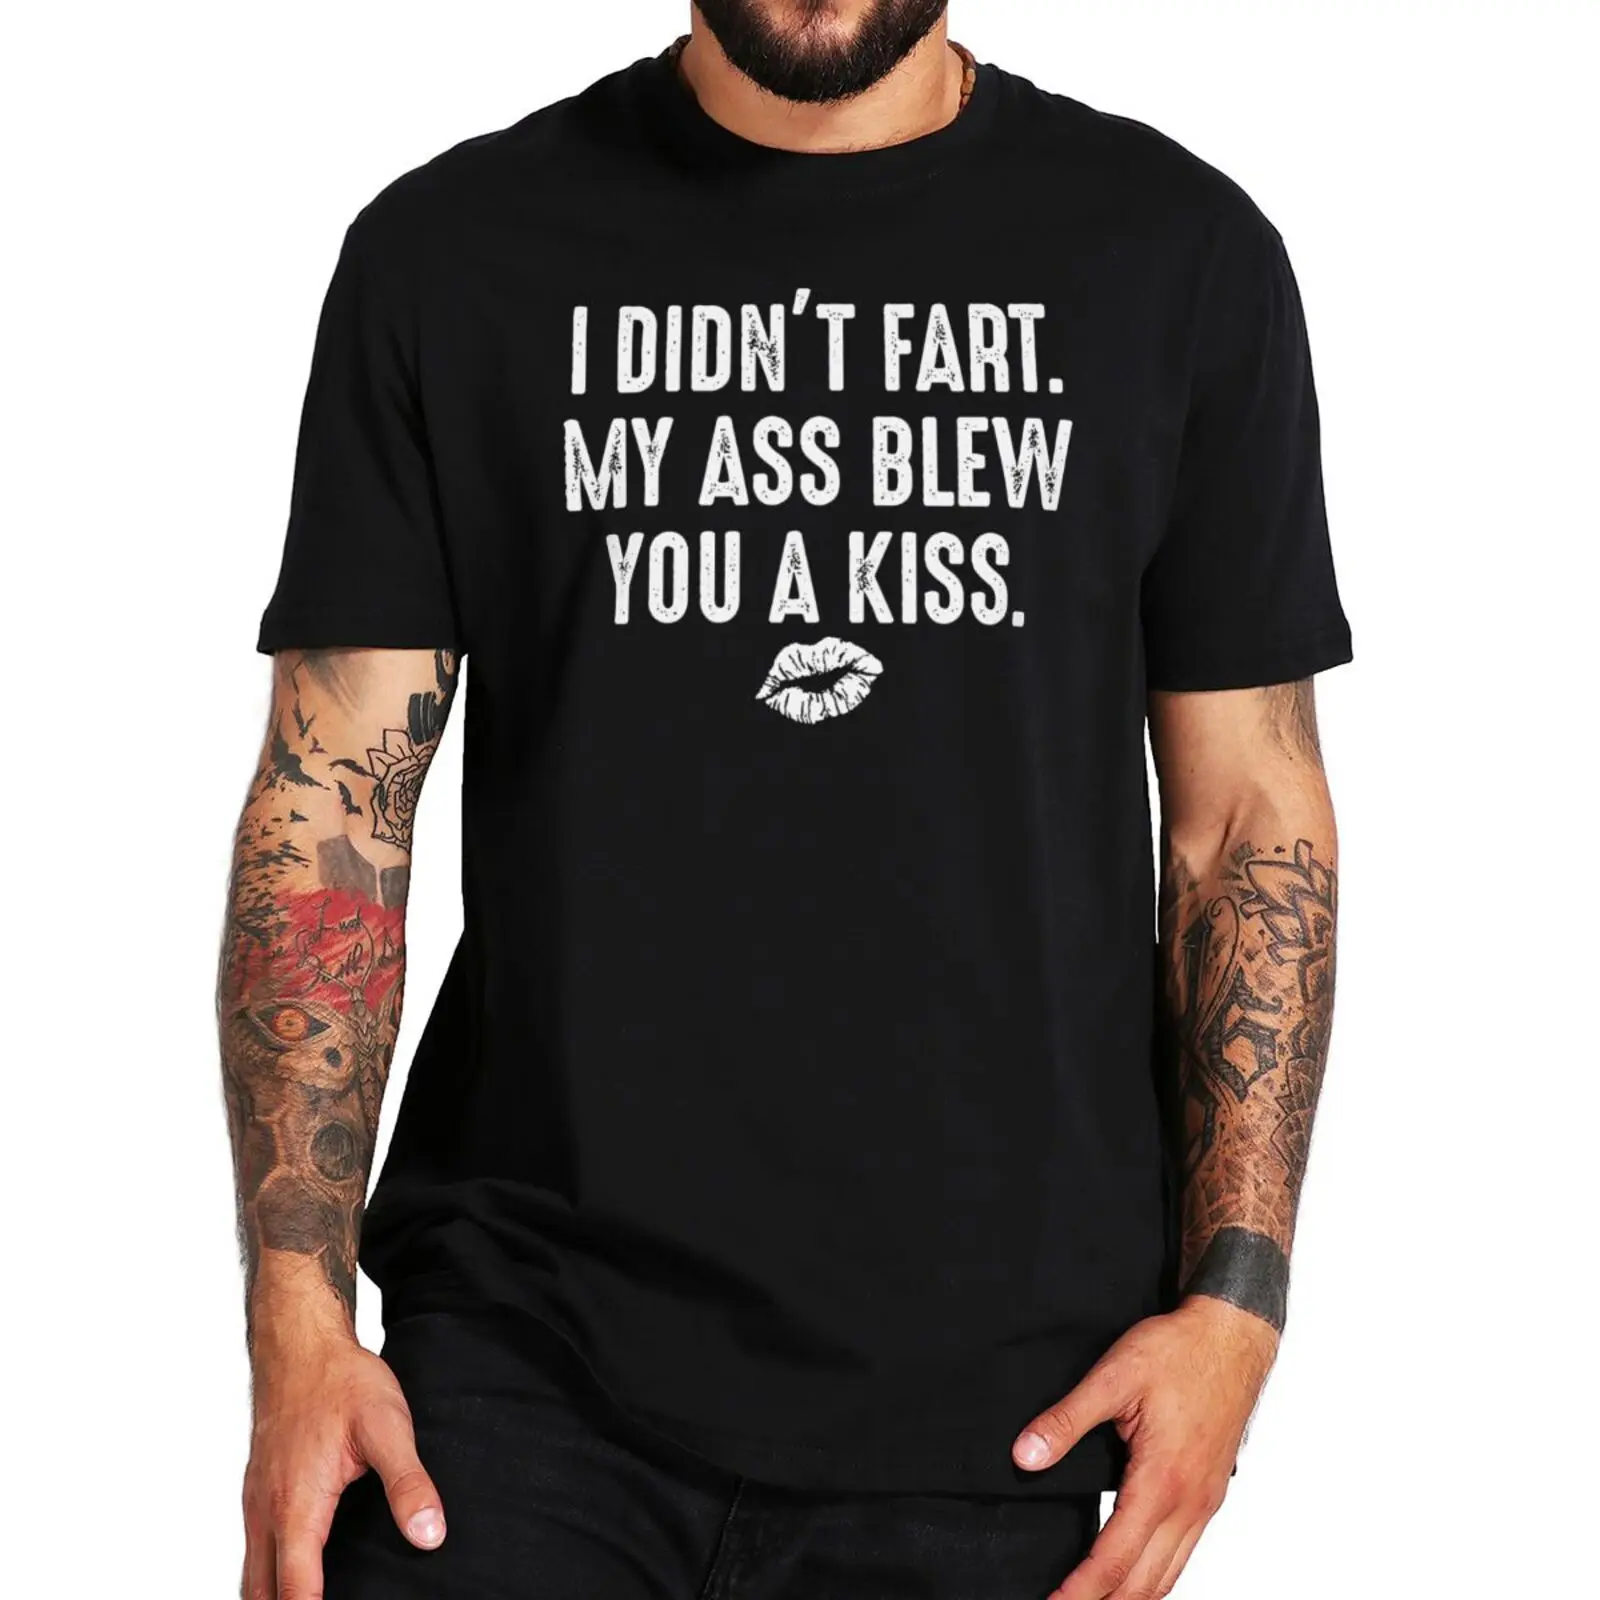 

Футболка с надписью «I Not Fart My Ass Blow You A Kiss», забавная саркастическая Цитата 2022, трендовая футболка с юмором, 100% хлопковая футболка оверсайз